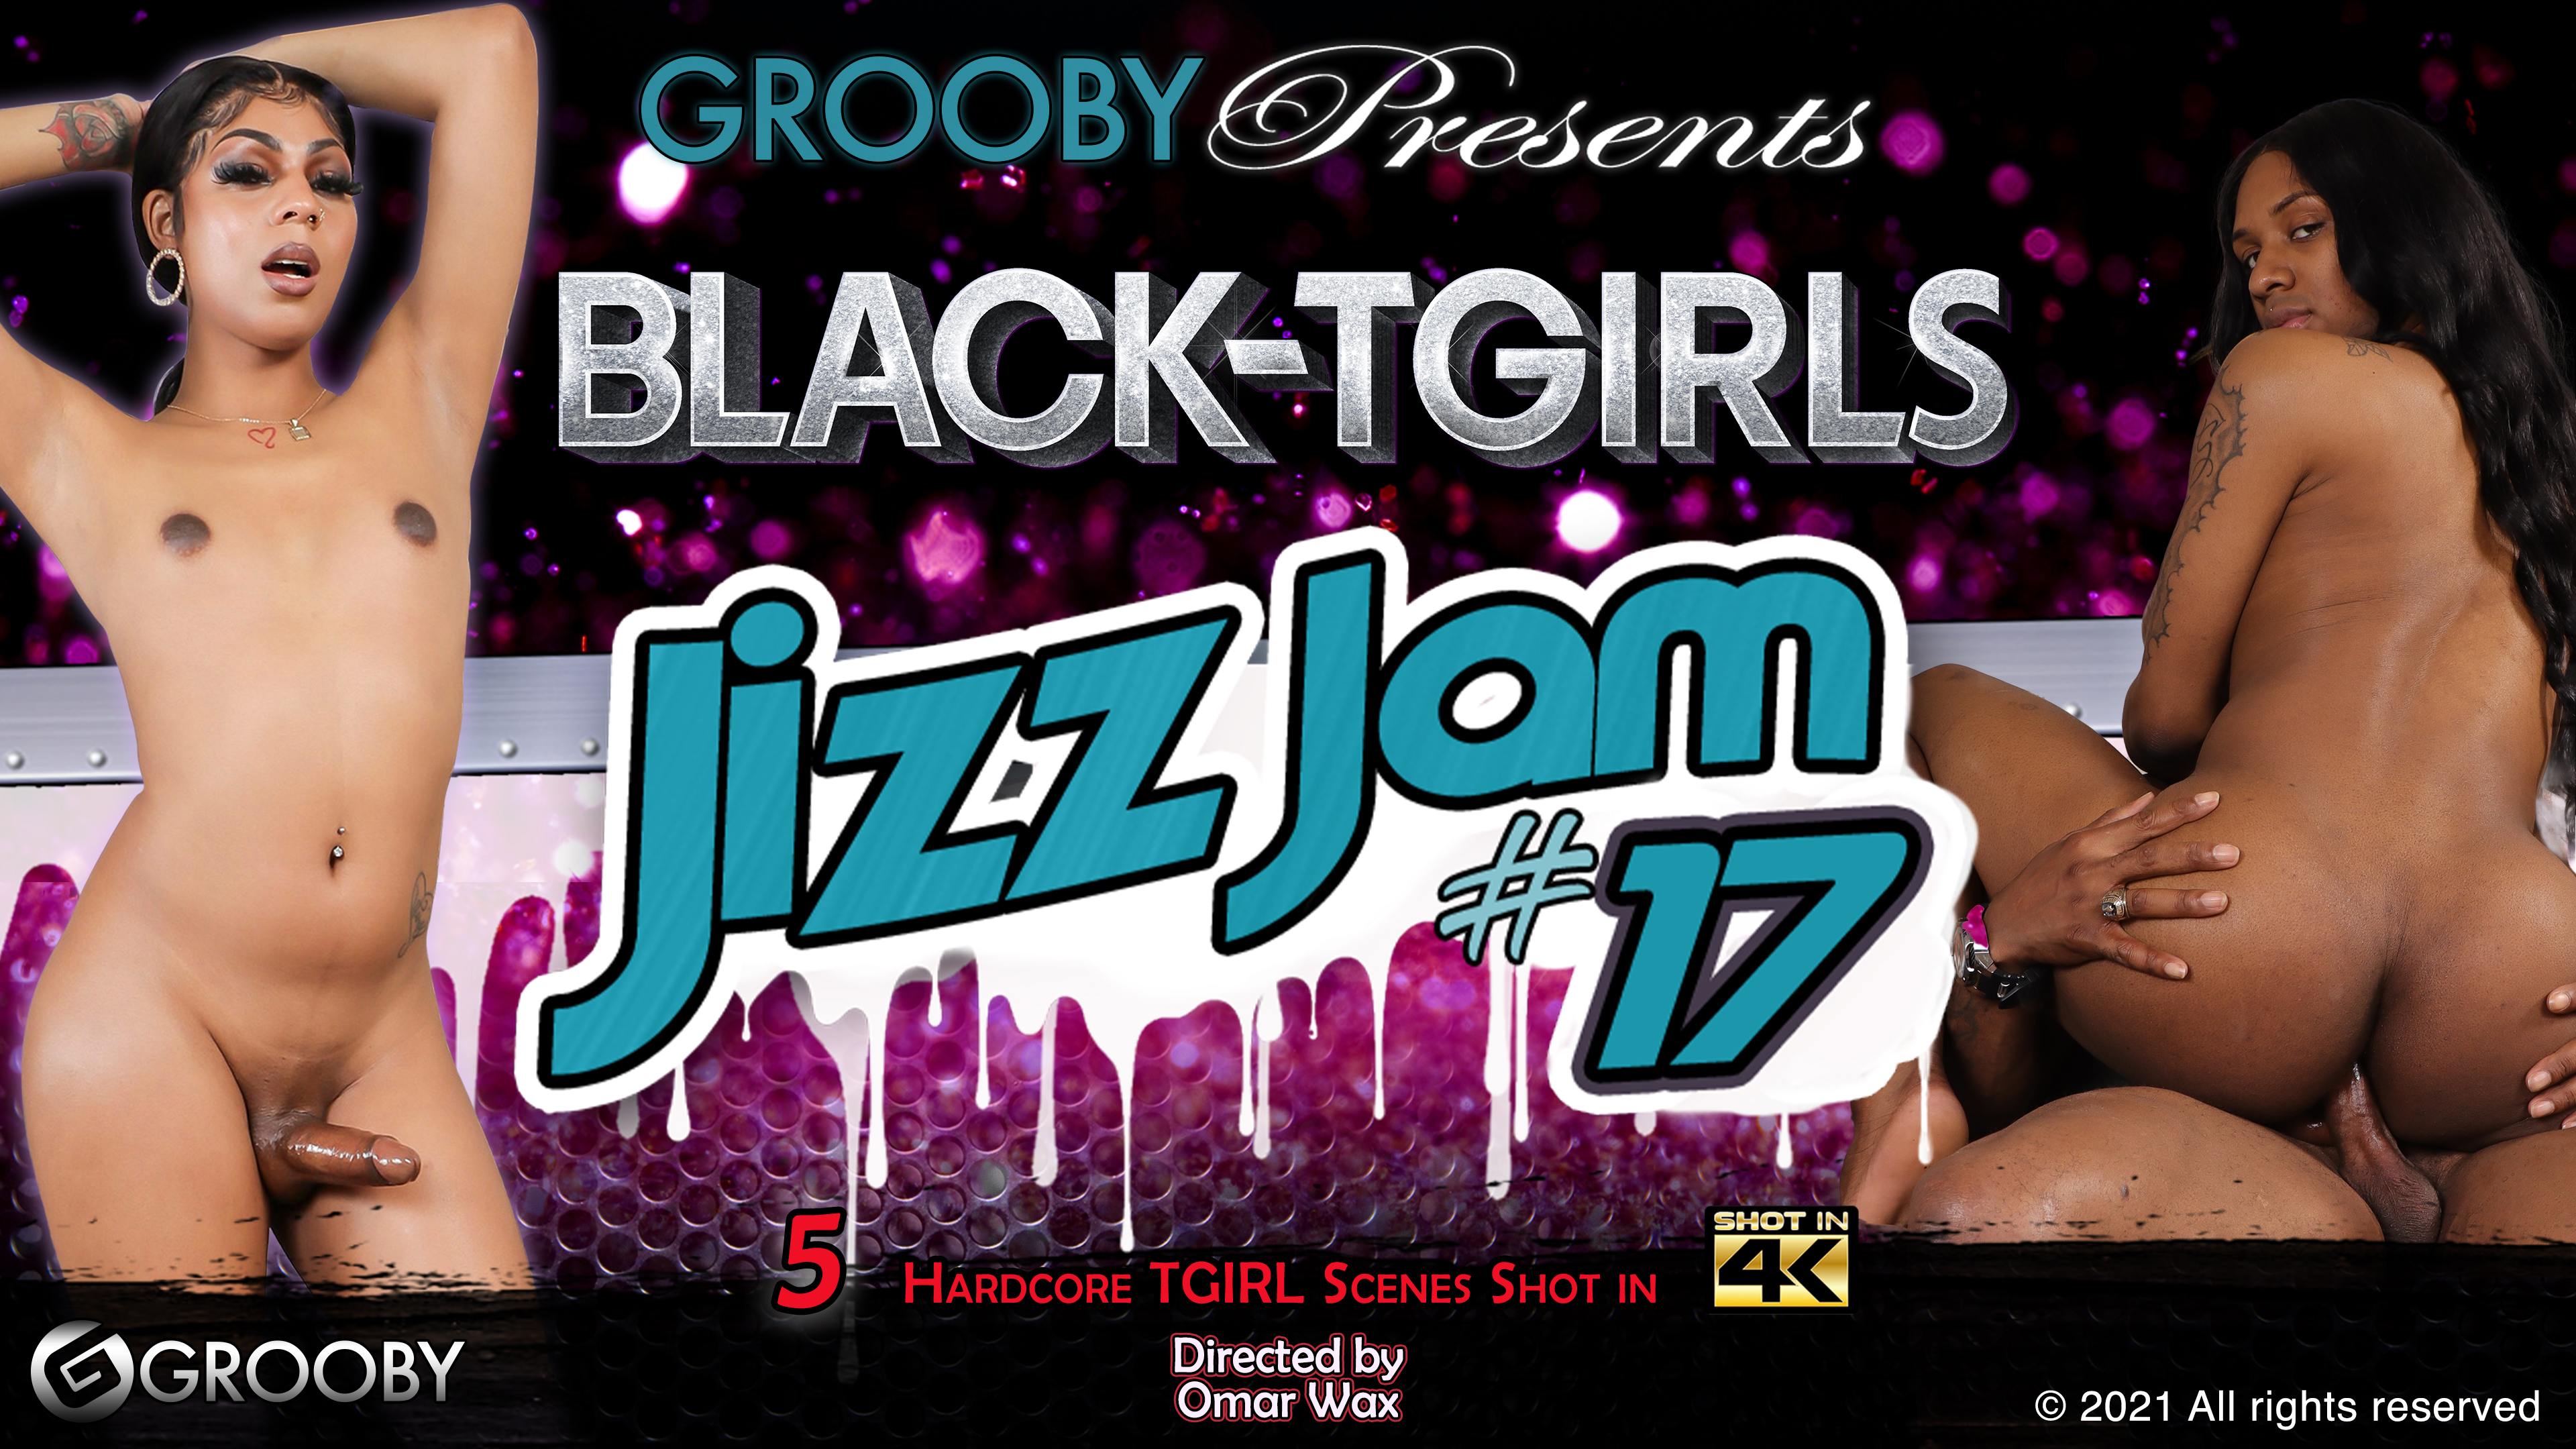 Black-Tgirls Jizz Jam #17 DVD Trailer